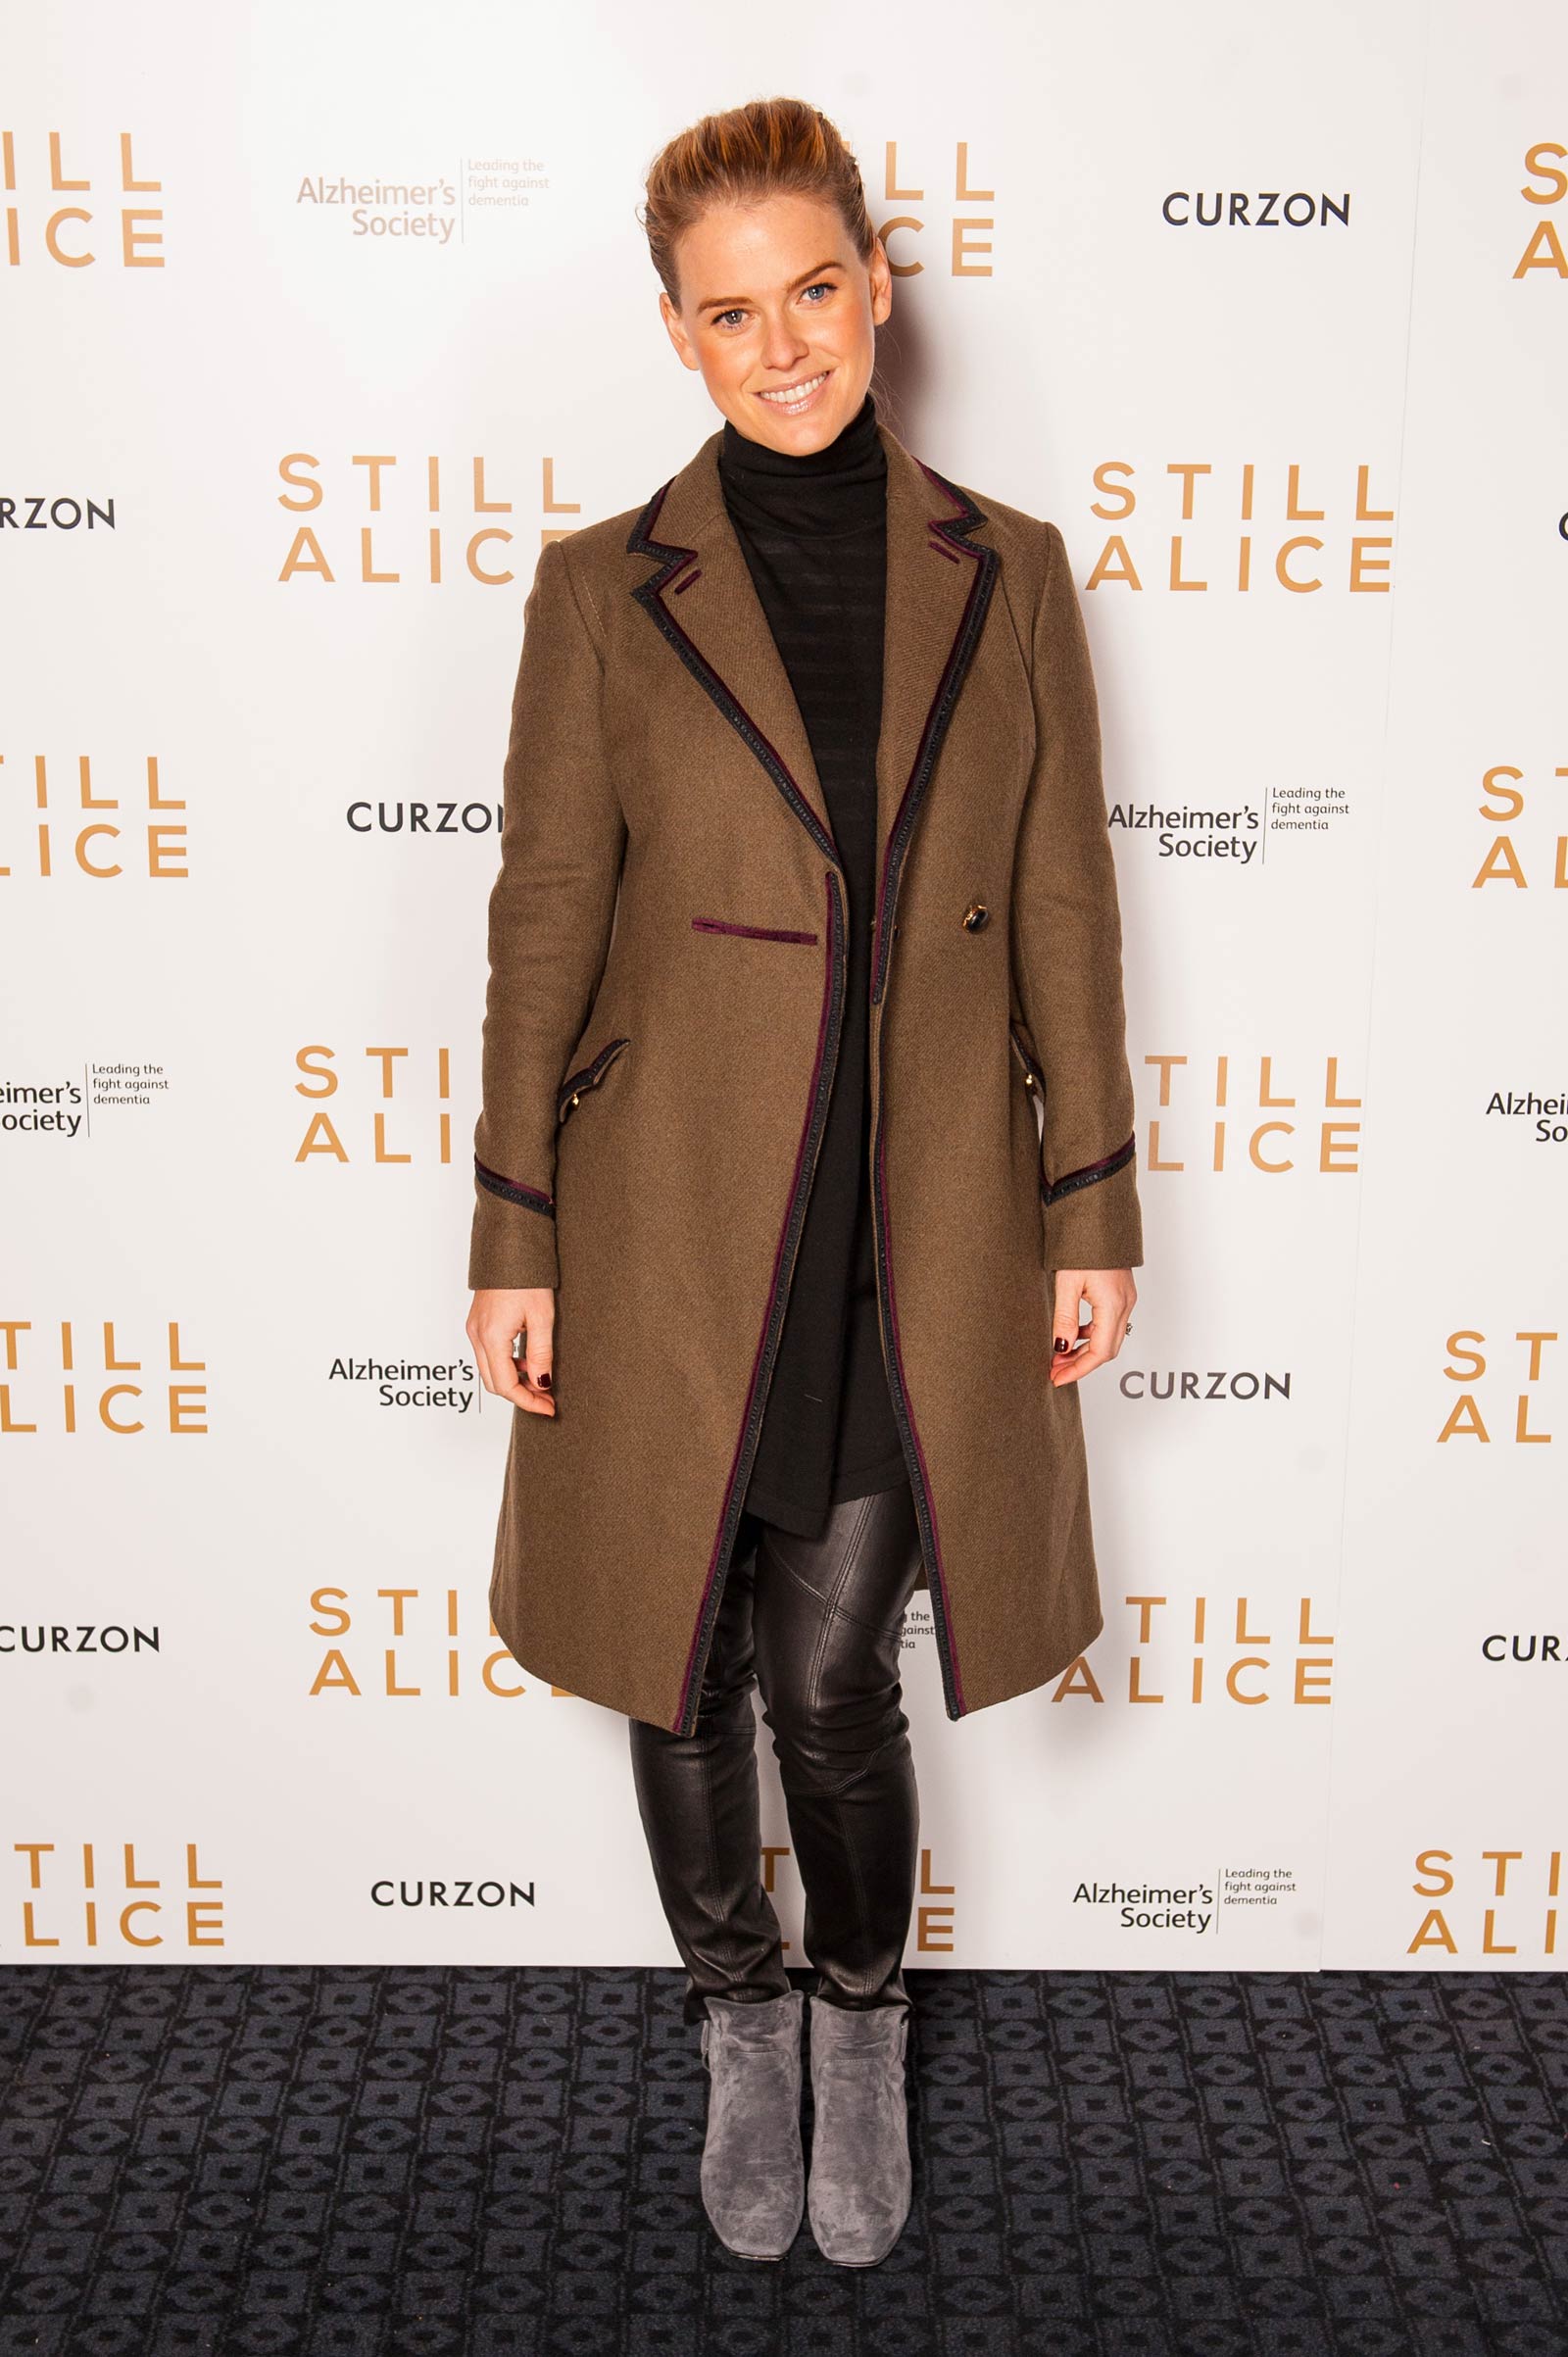 Alice Eve attends Charity premiere of Still Alice